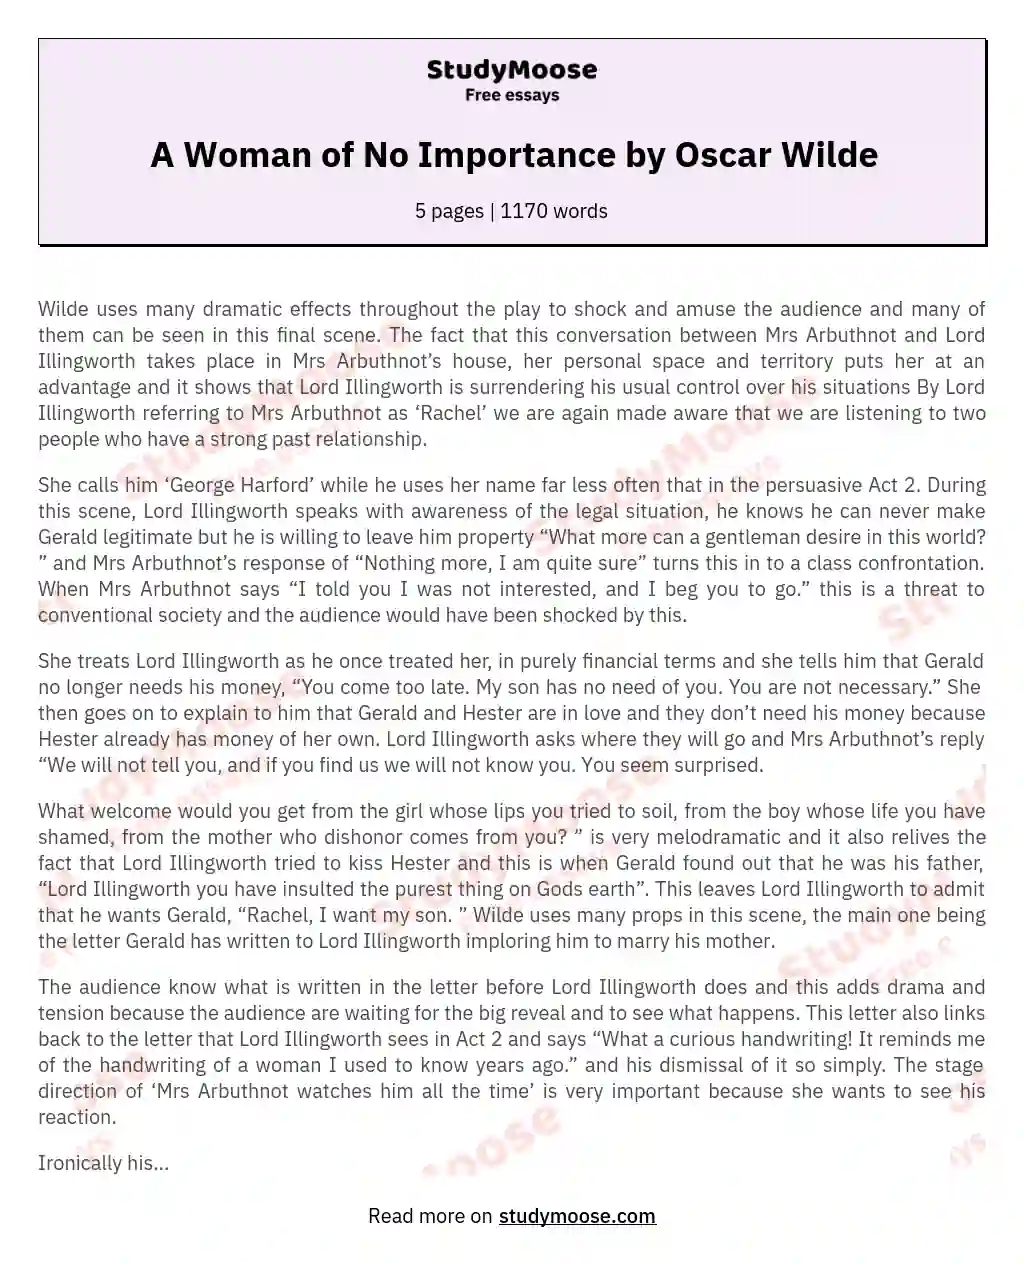 A Woman of No Importance by Oscar Wilde essay